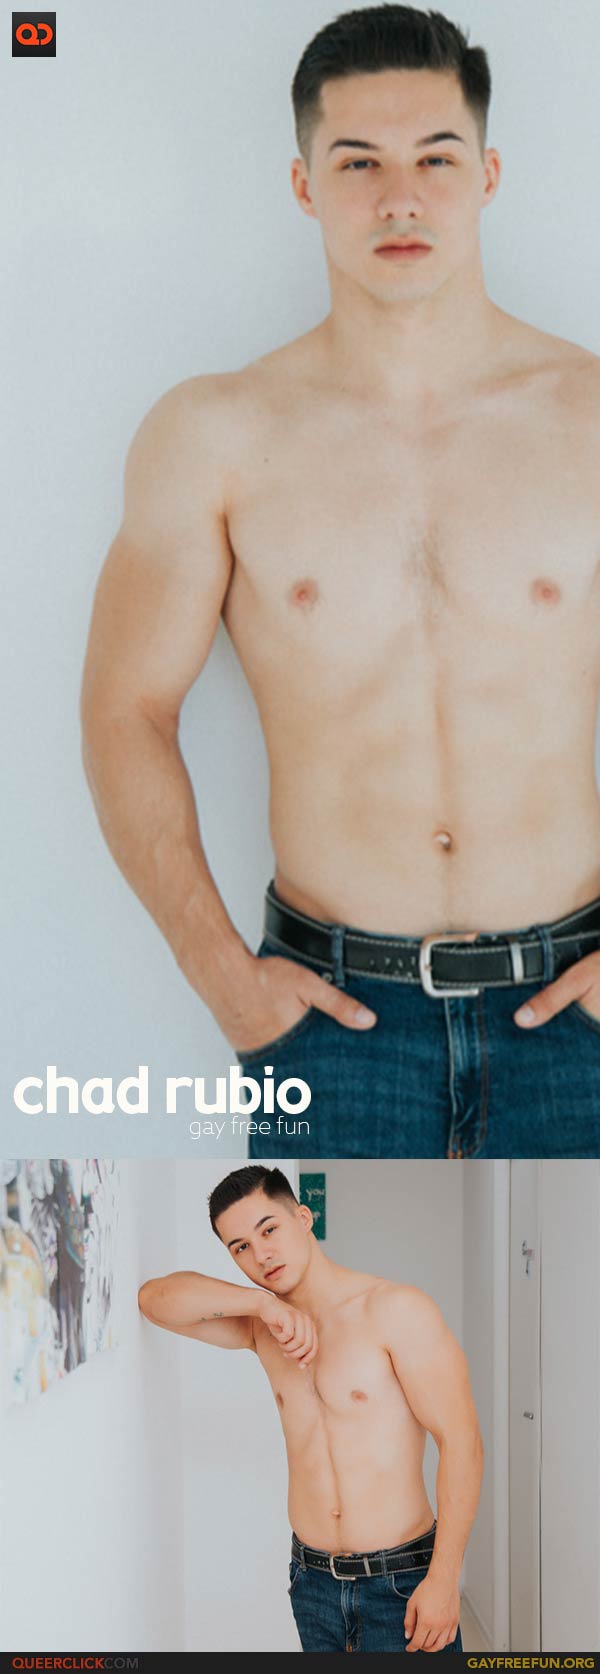 ChadRubio is Fun, Flirty and Sexy!